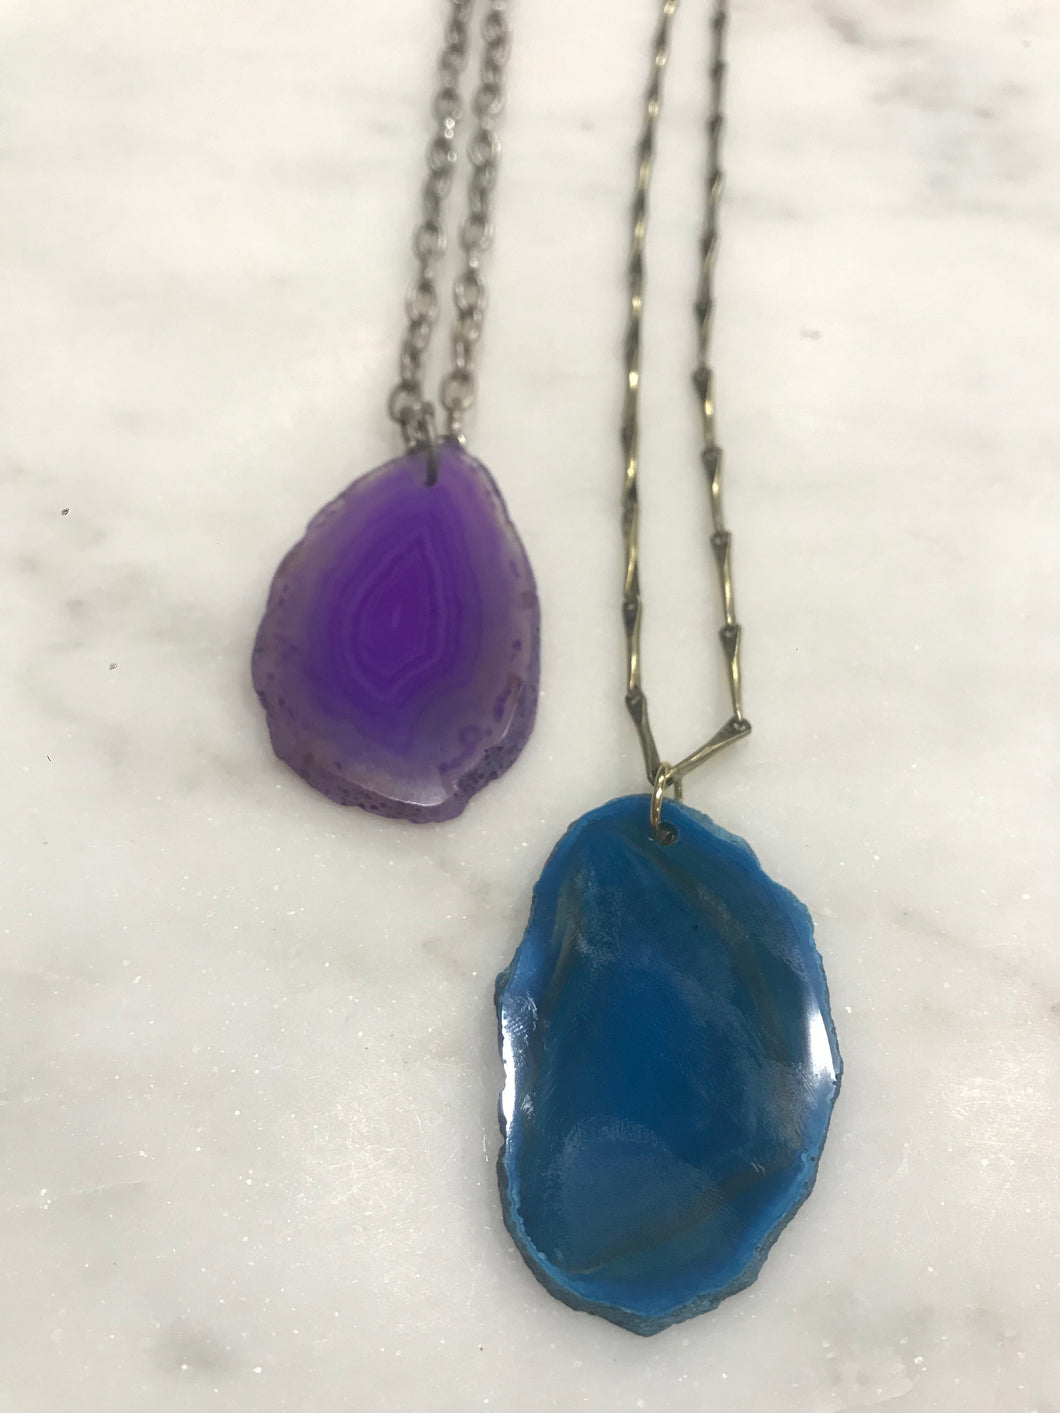 Agate pendant in purple or teal